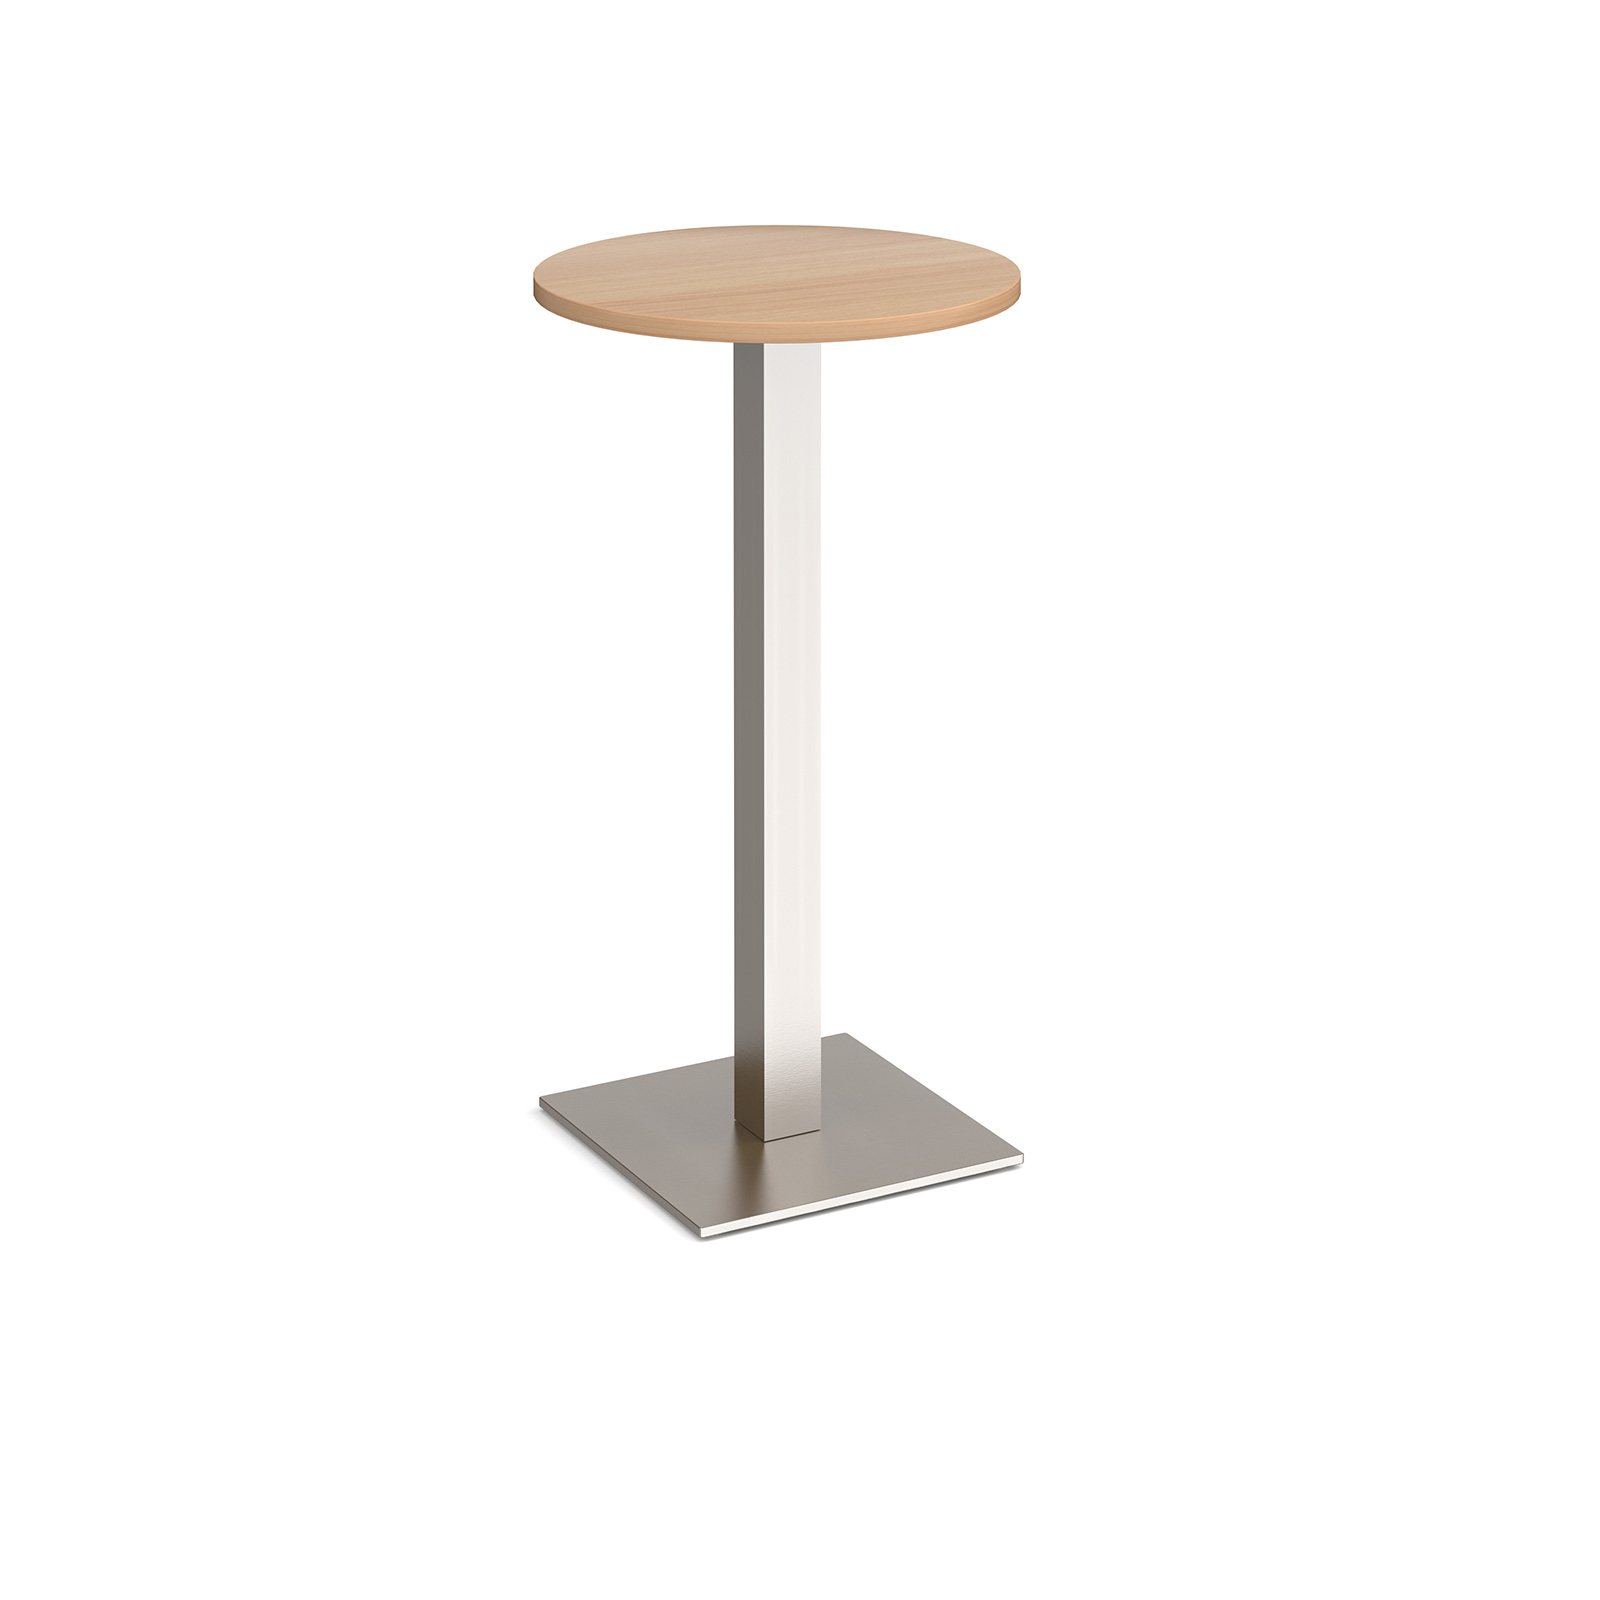 Brescia circular poseur table with flat square base